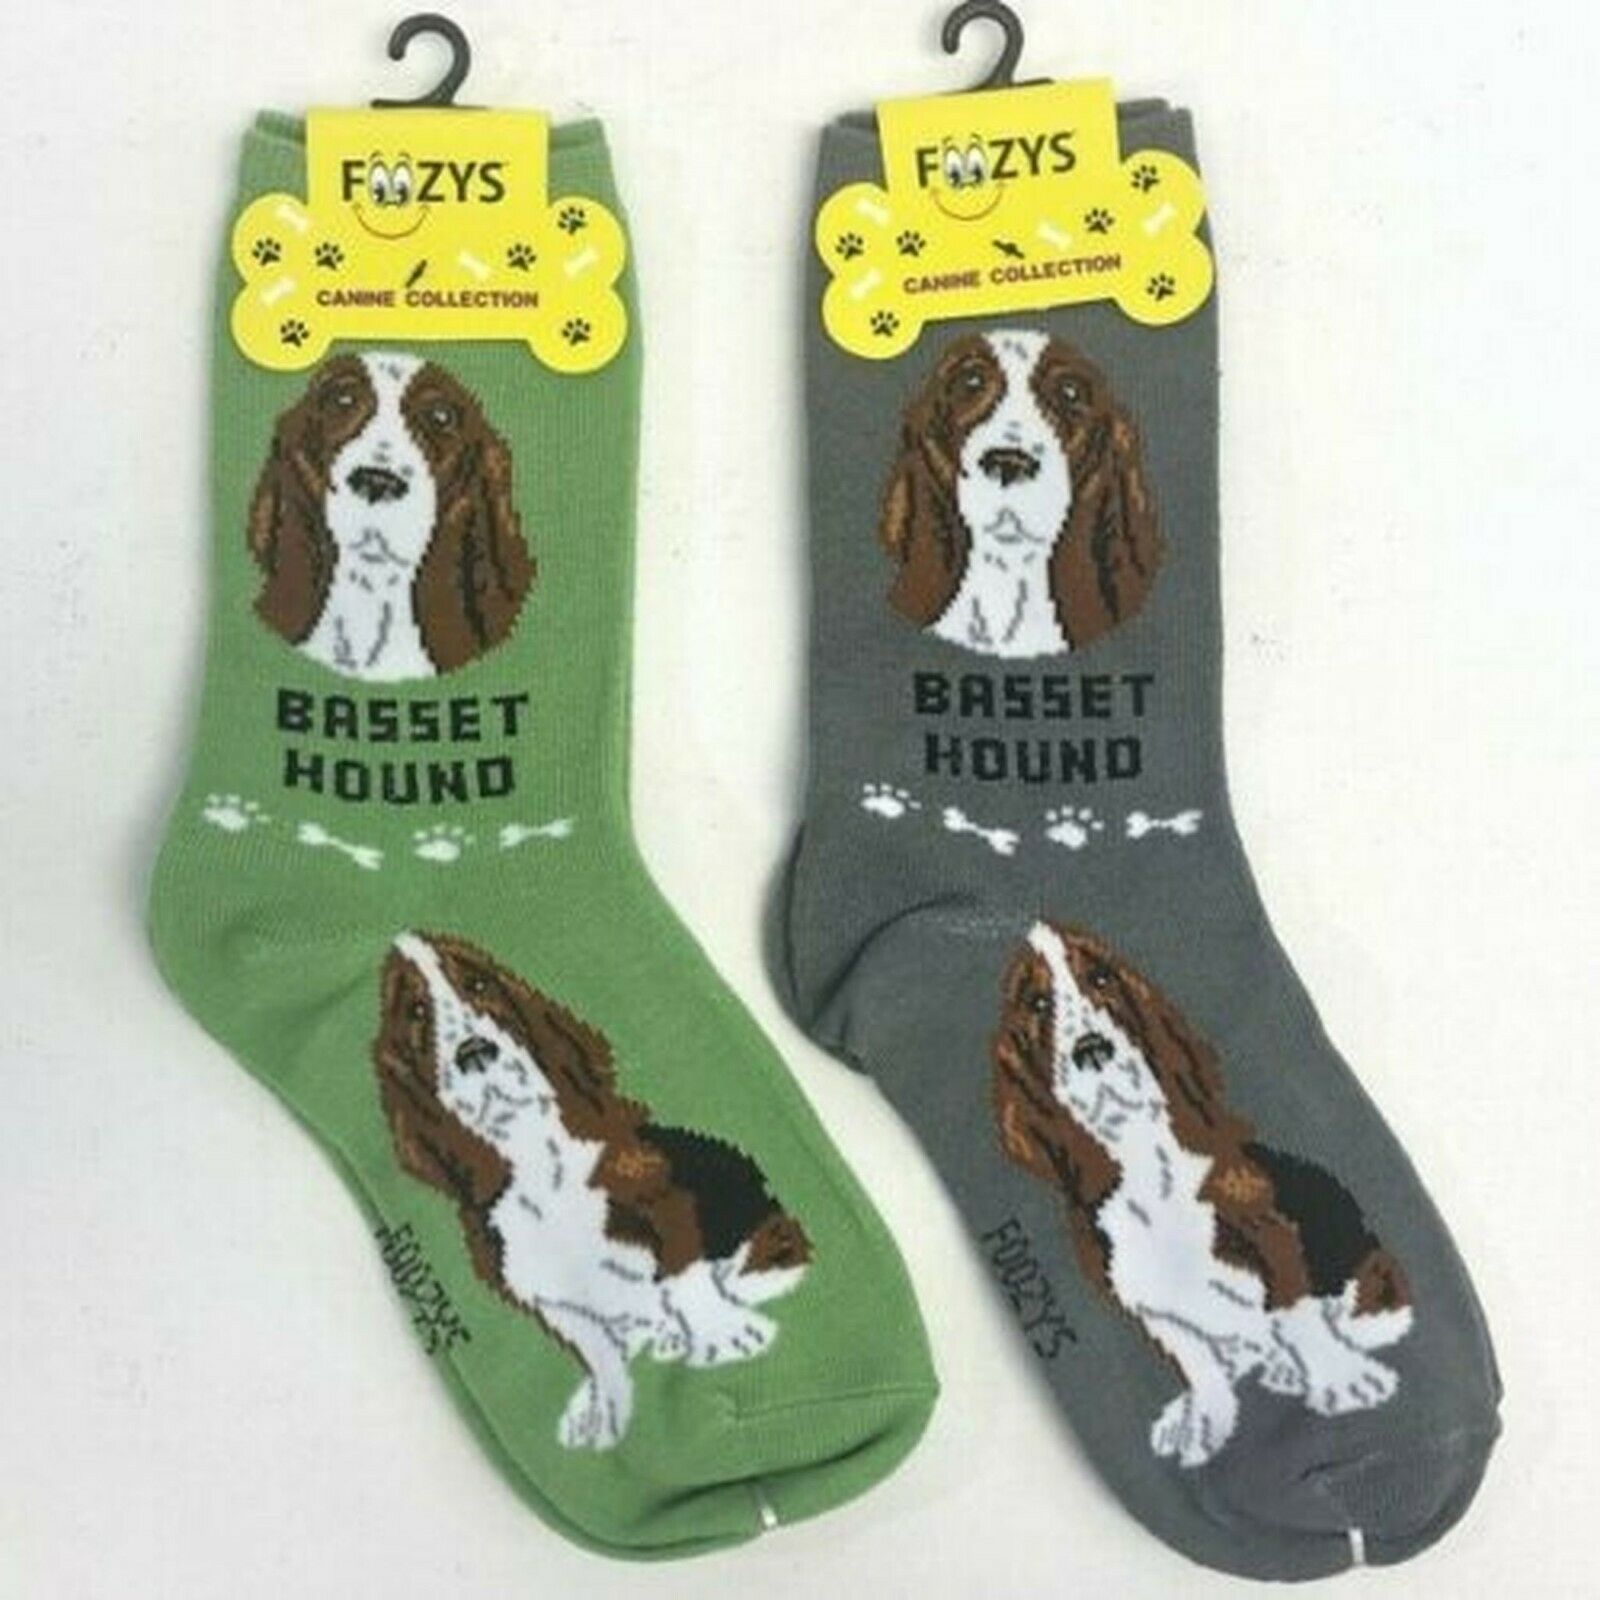 Basset Hound Hunting Dog Socks 2 Pairs Women's Foozys Grey Puppy Breed Cute Dogs